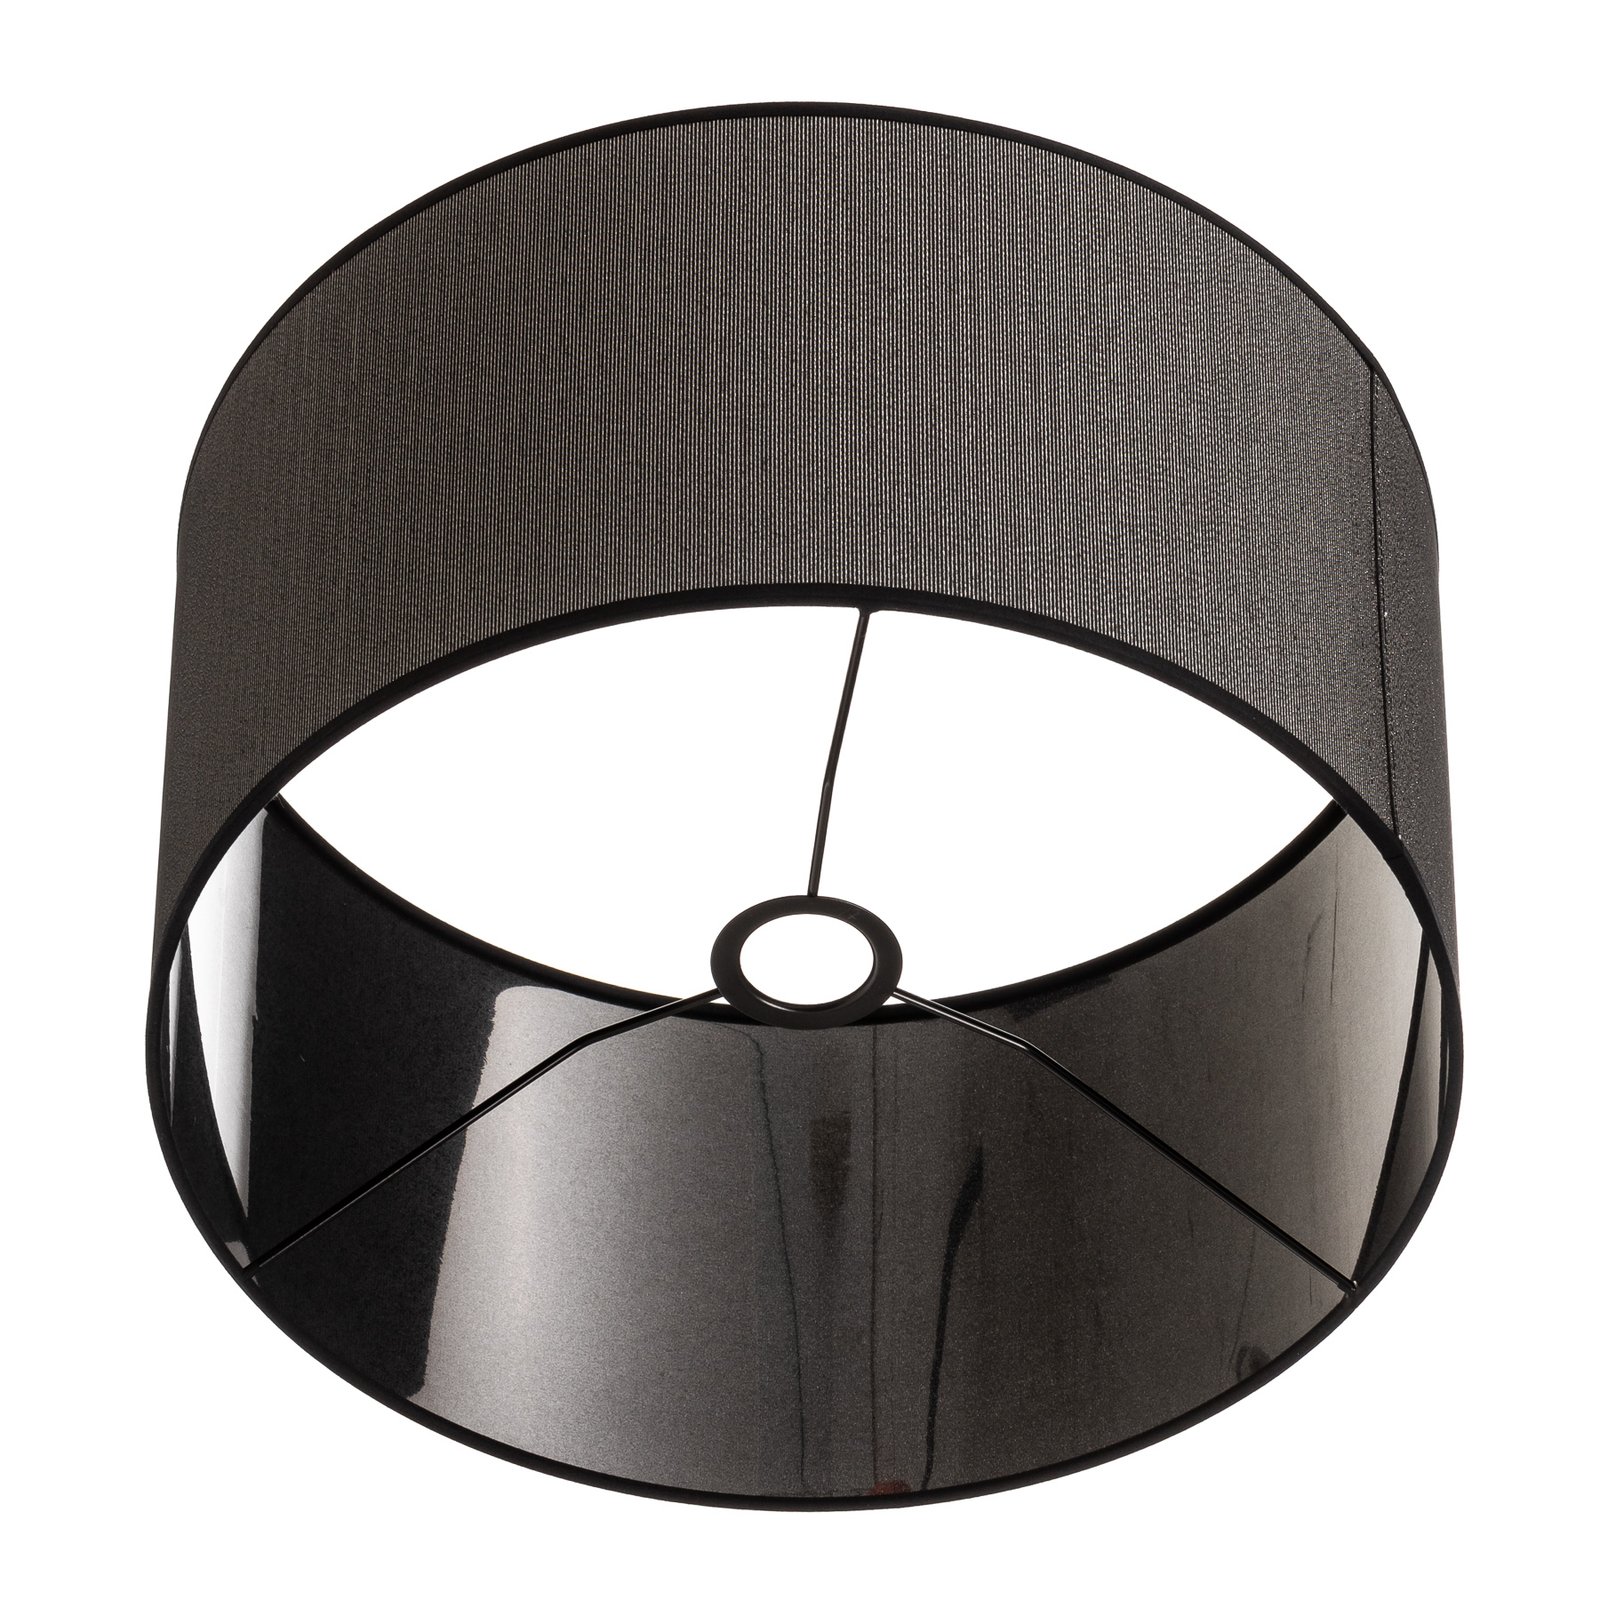 Roller lampshade Ø 40 cm, black/silver